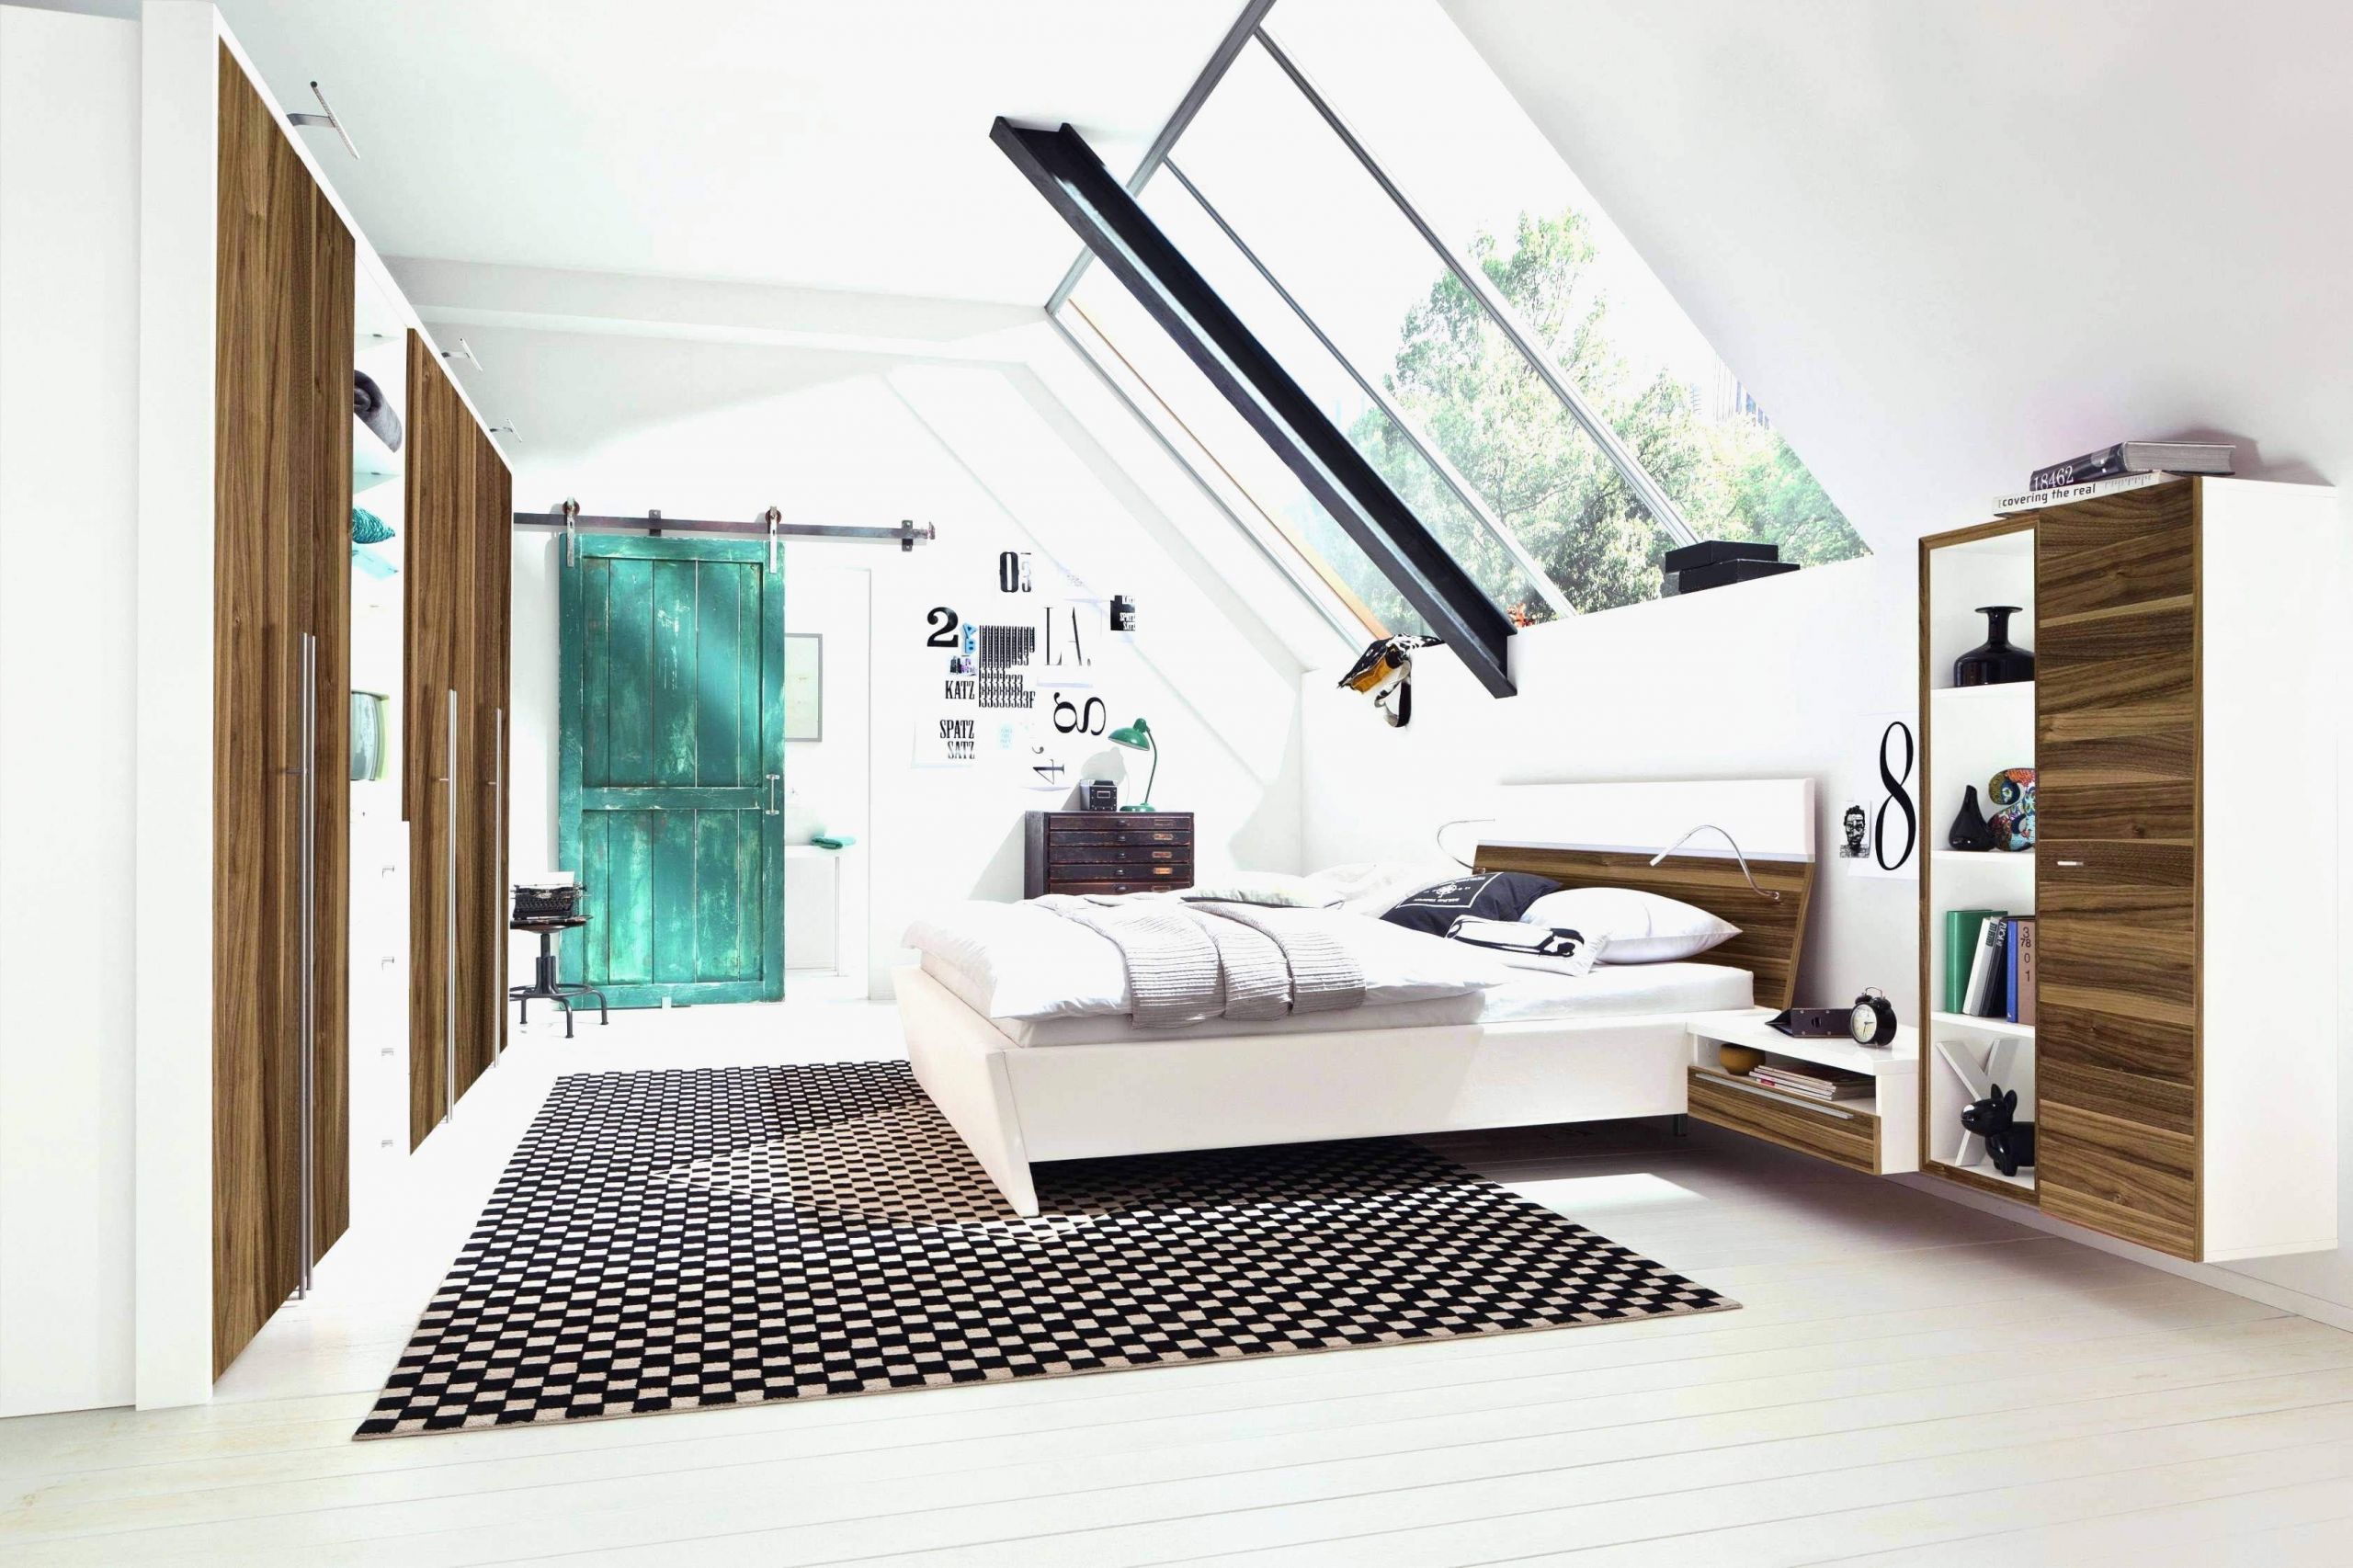 wanddeko wohnzimmer ideen schon wanddeko wohnzimmer luxus elegant dekoideen wohnzimmer ideas of wanddeko wohnzimmer ideen